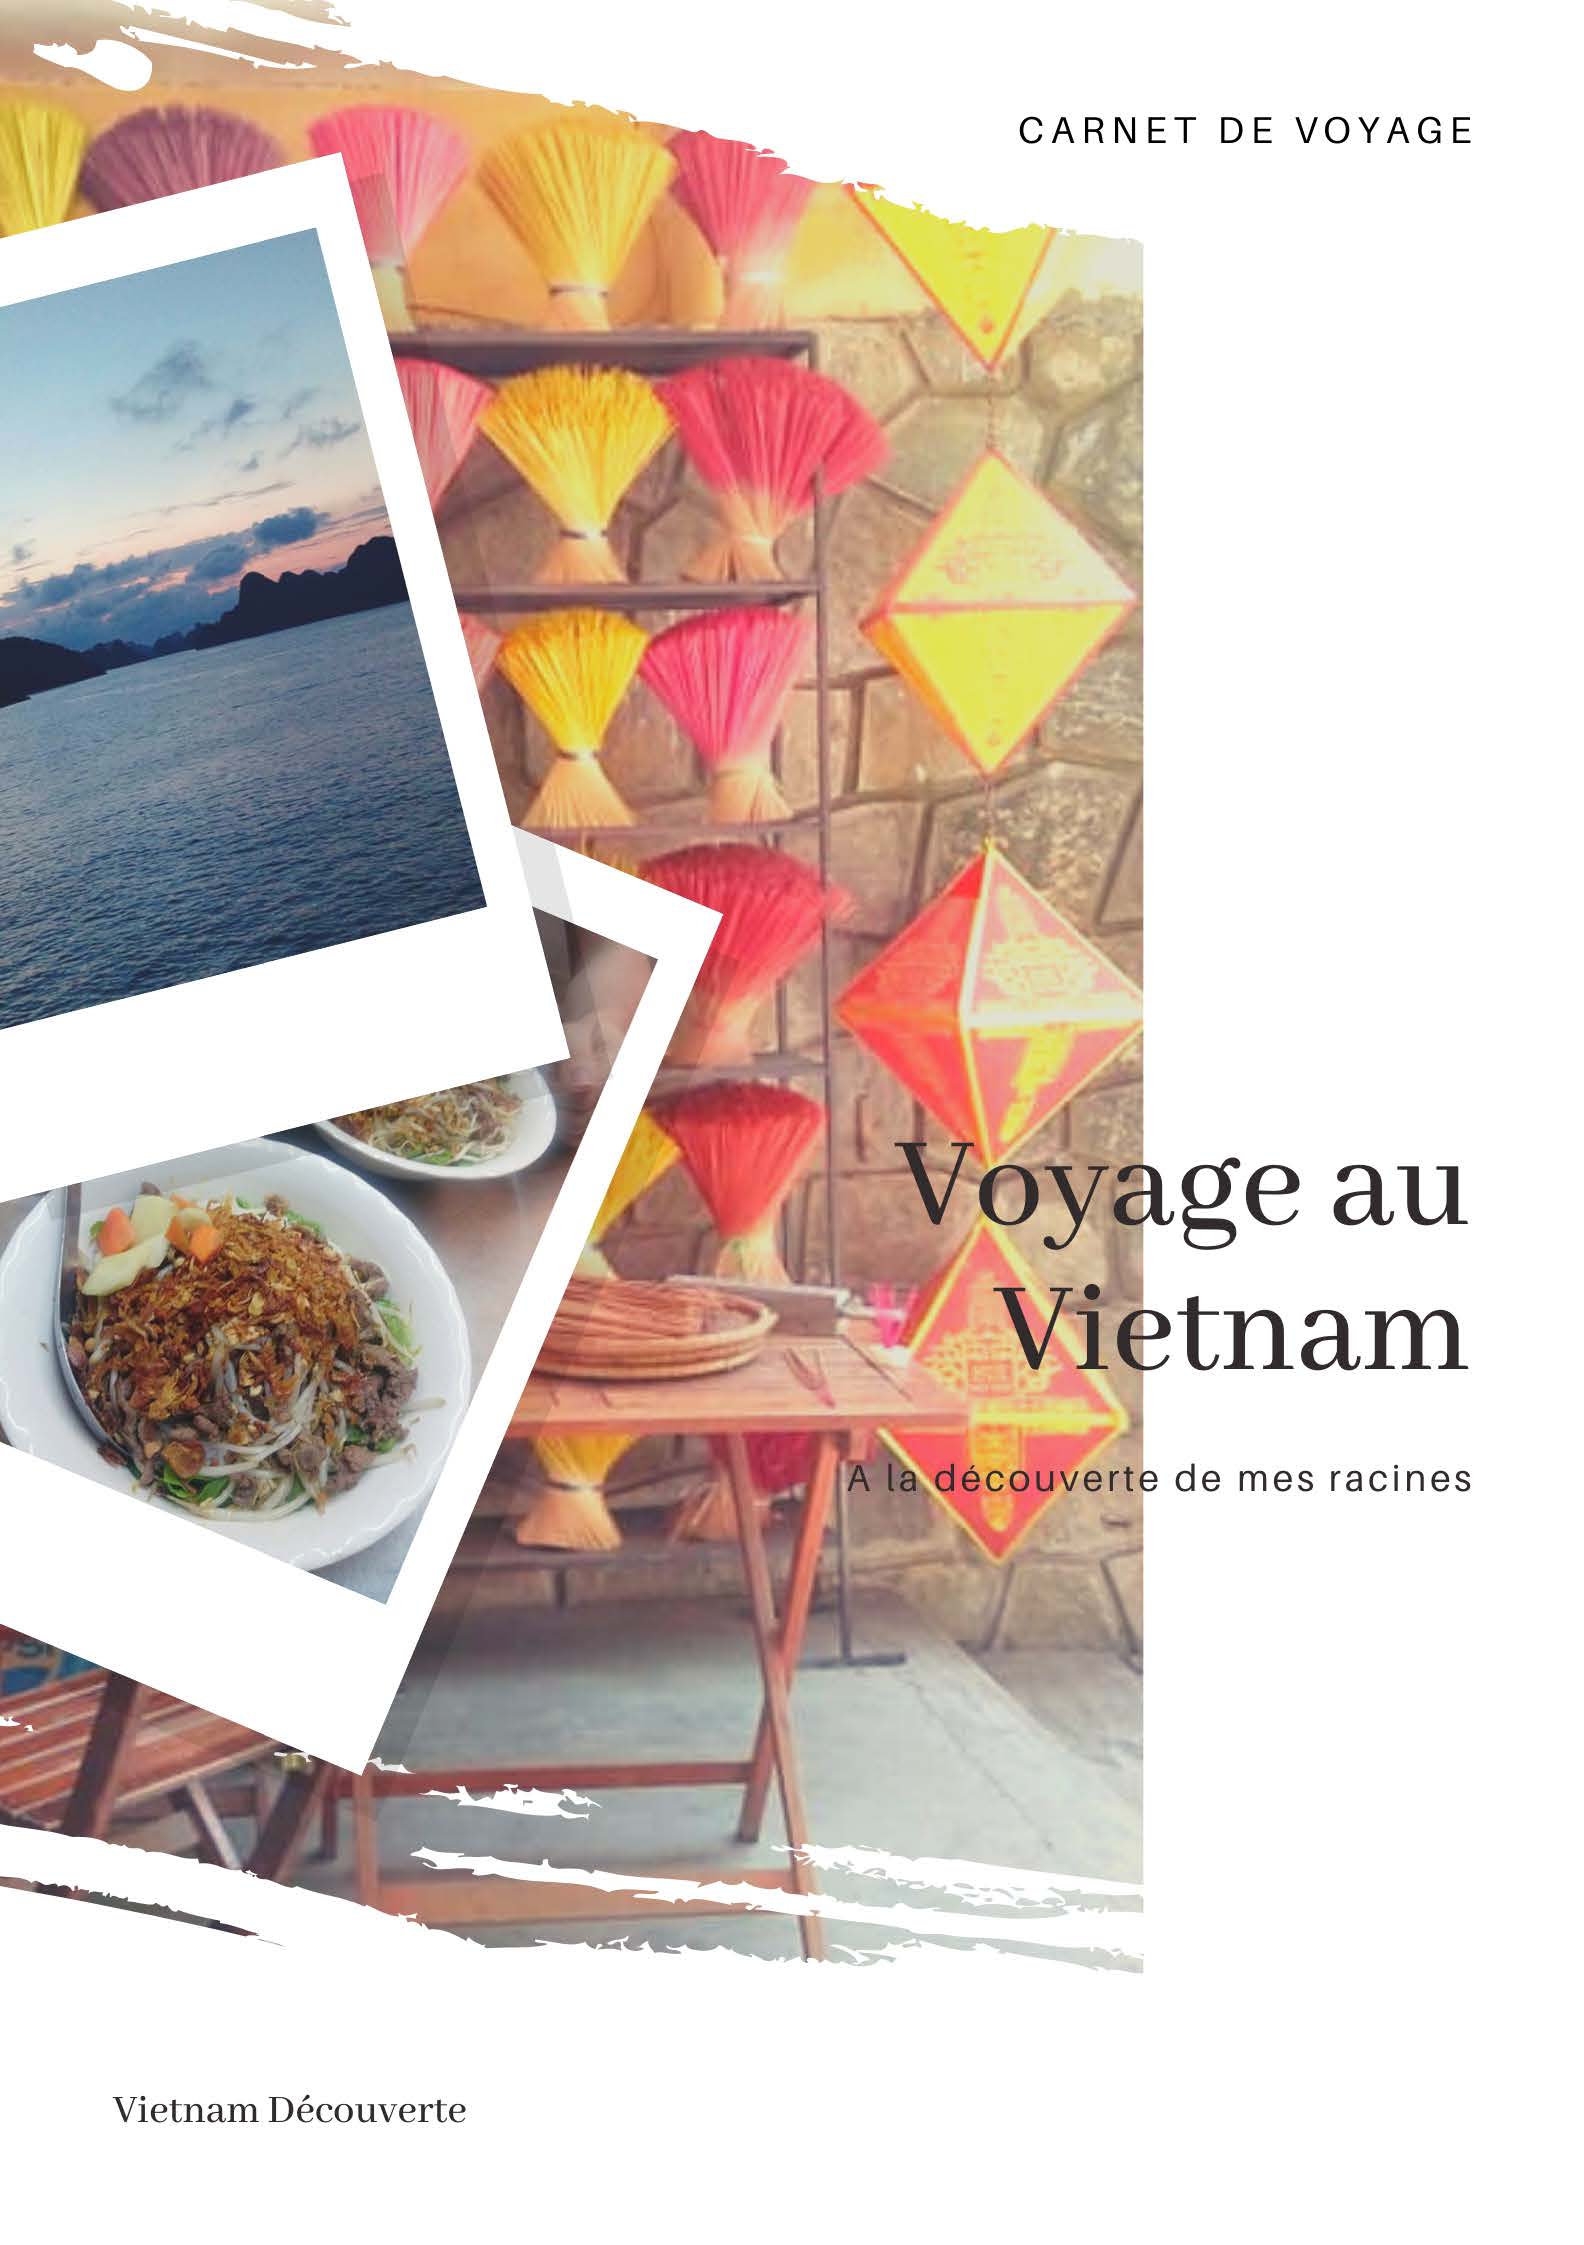 carnet de voyage vietnam